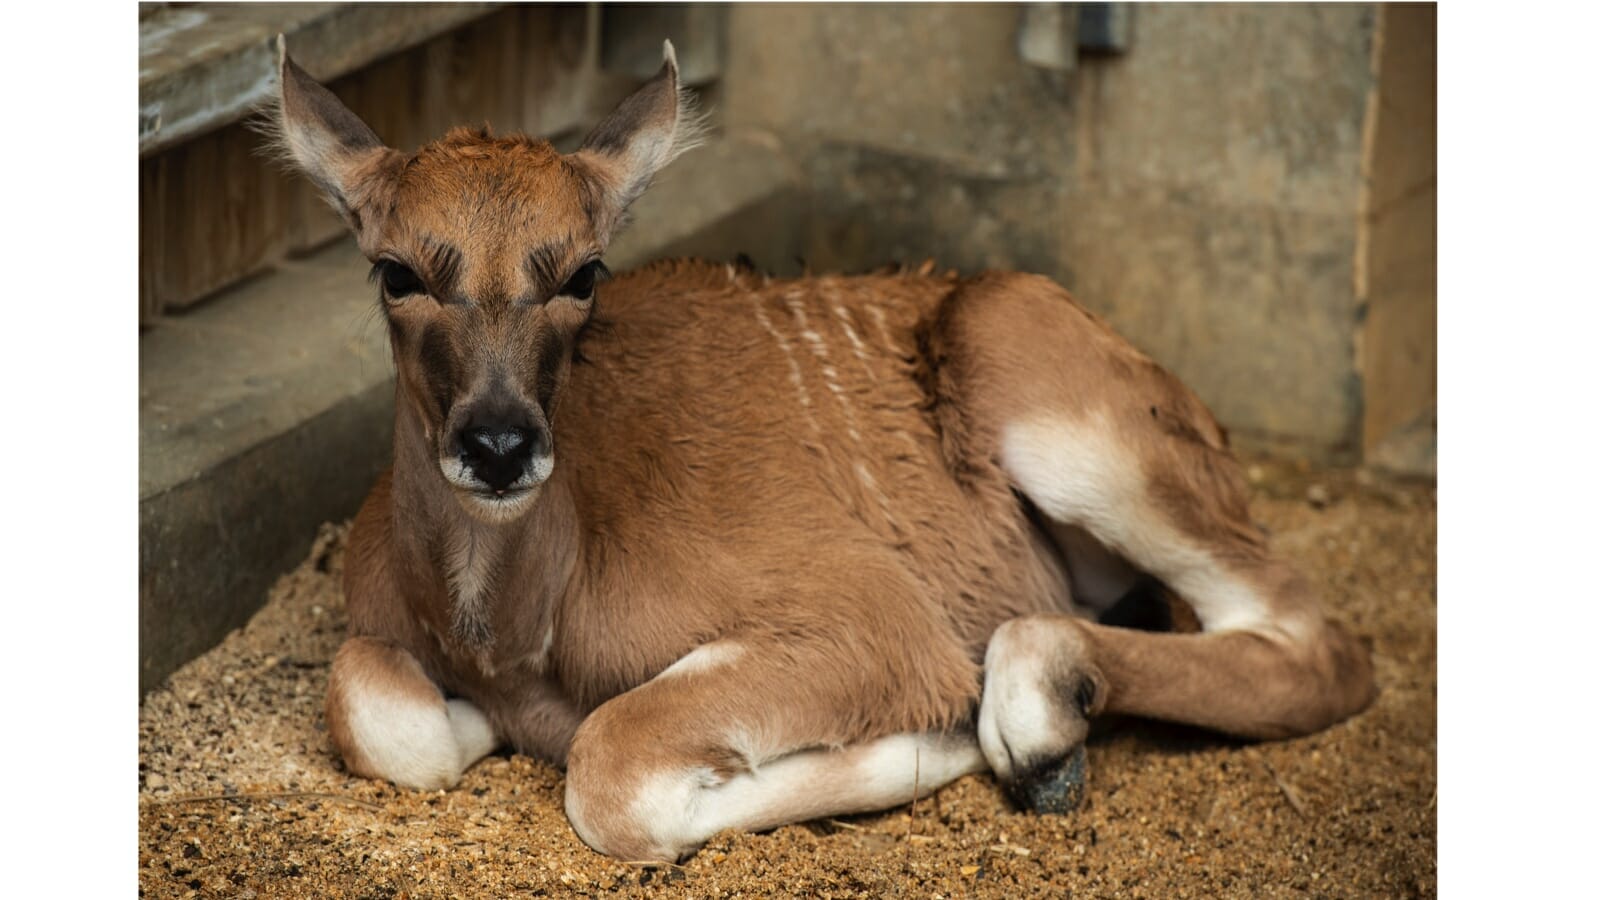 A New Baby Eland Arrives at Disney’s Animal Kingdom